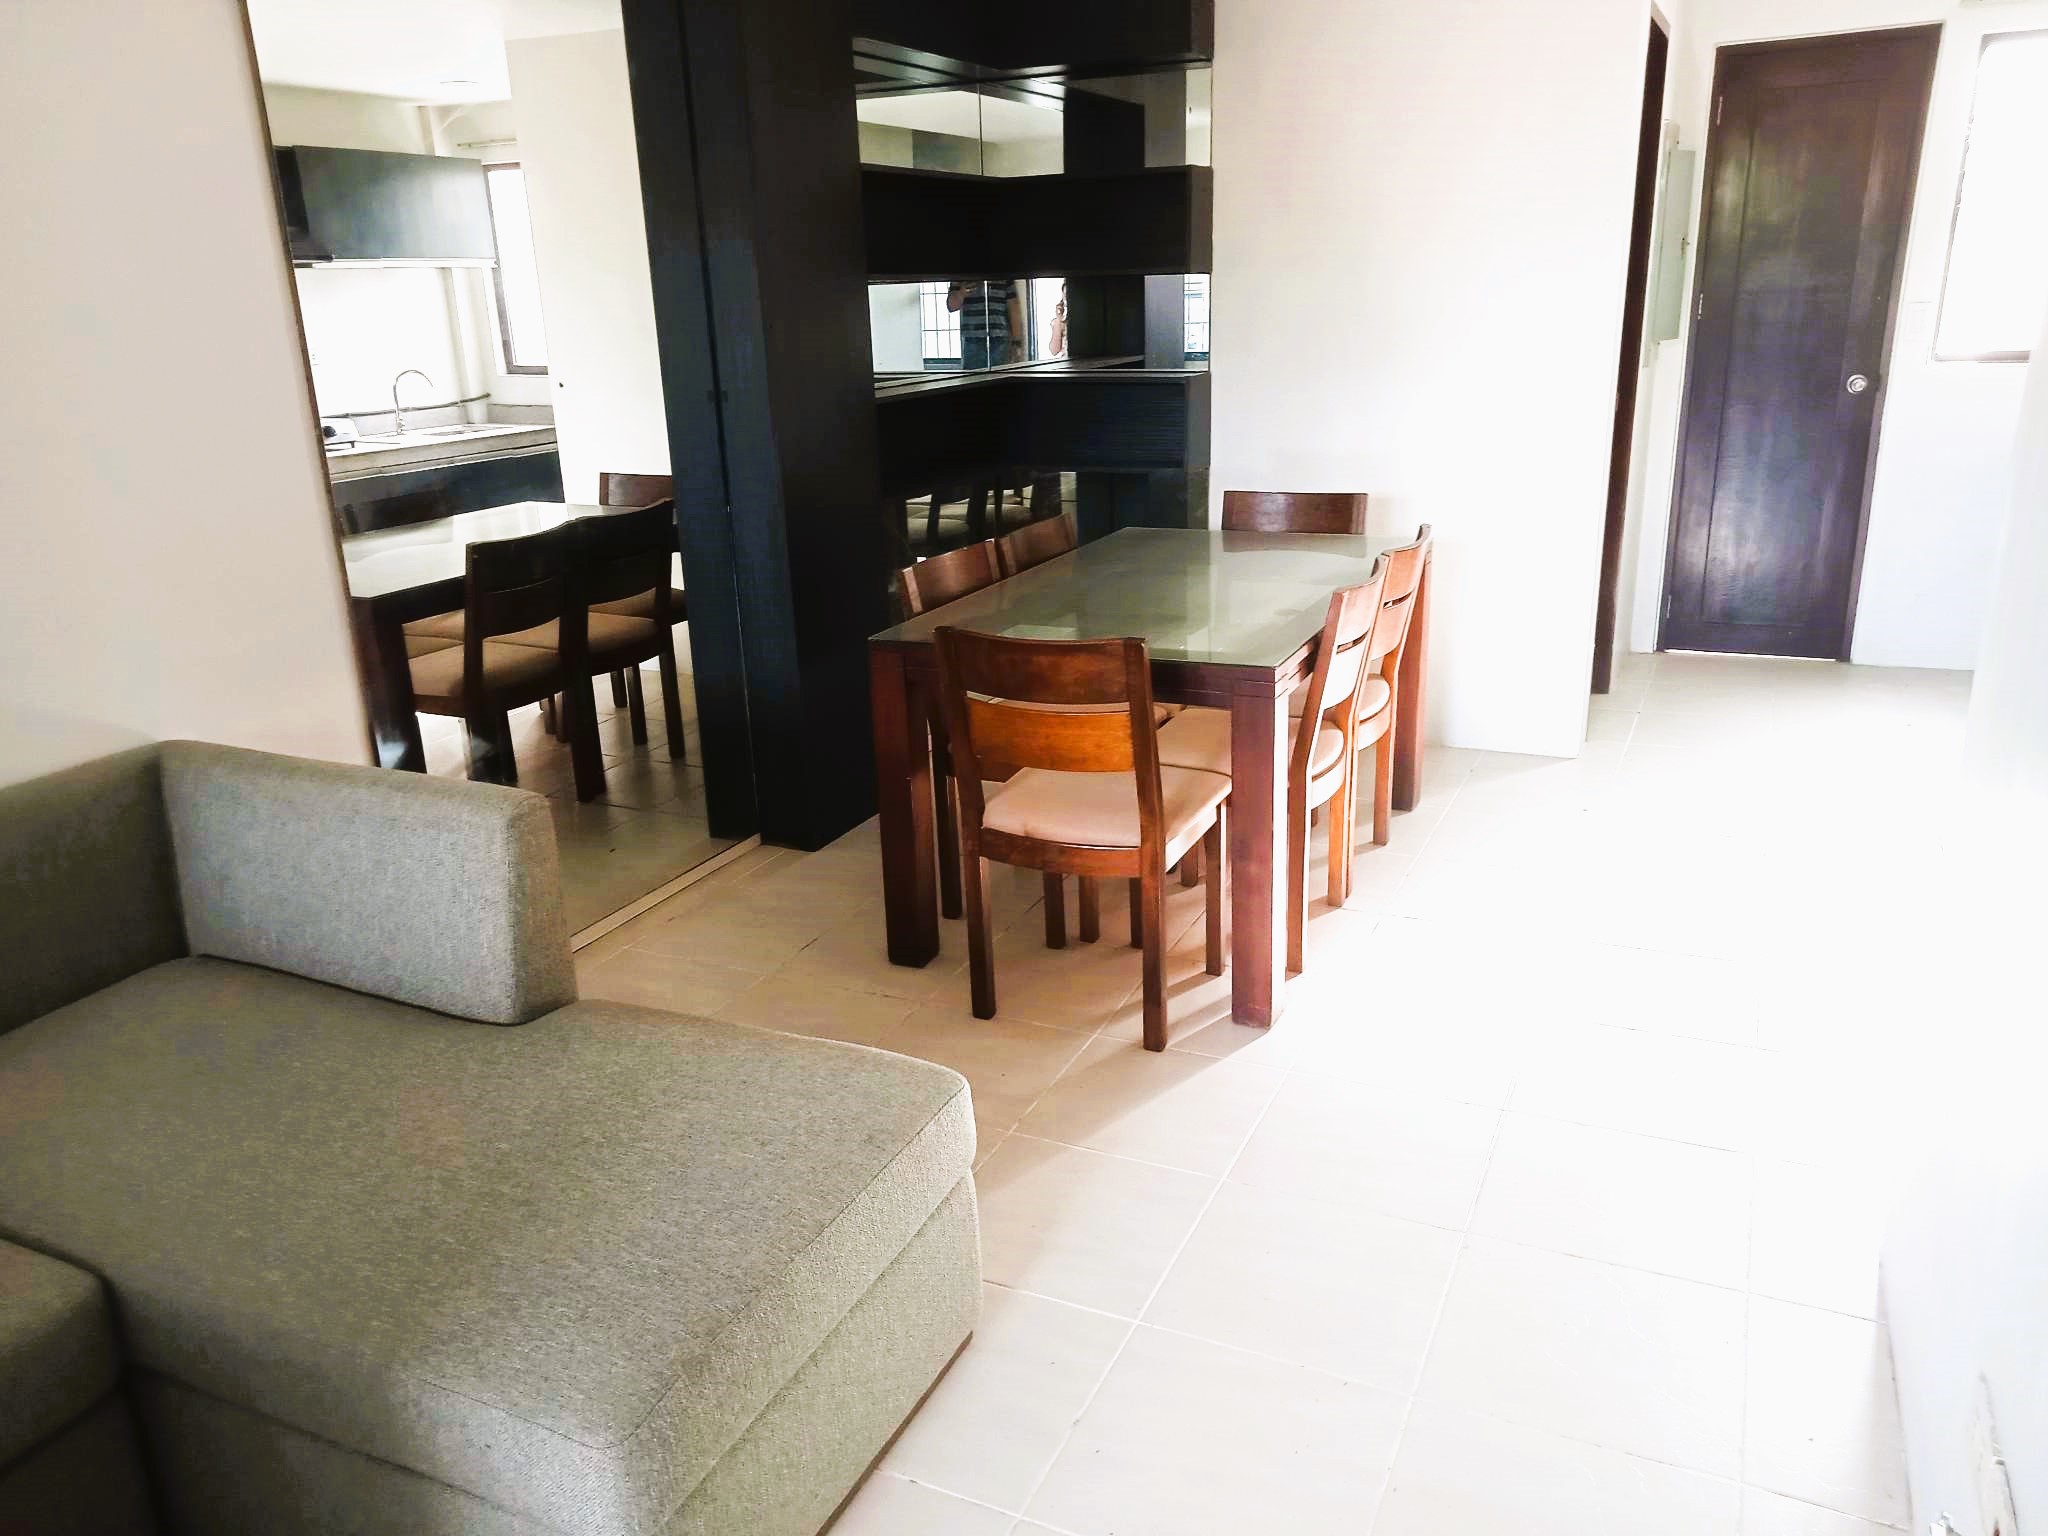 3-bedroom-semi-furnished-apartment-in-canduman-mandaue-city-near-ateneo-de-cebu